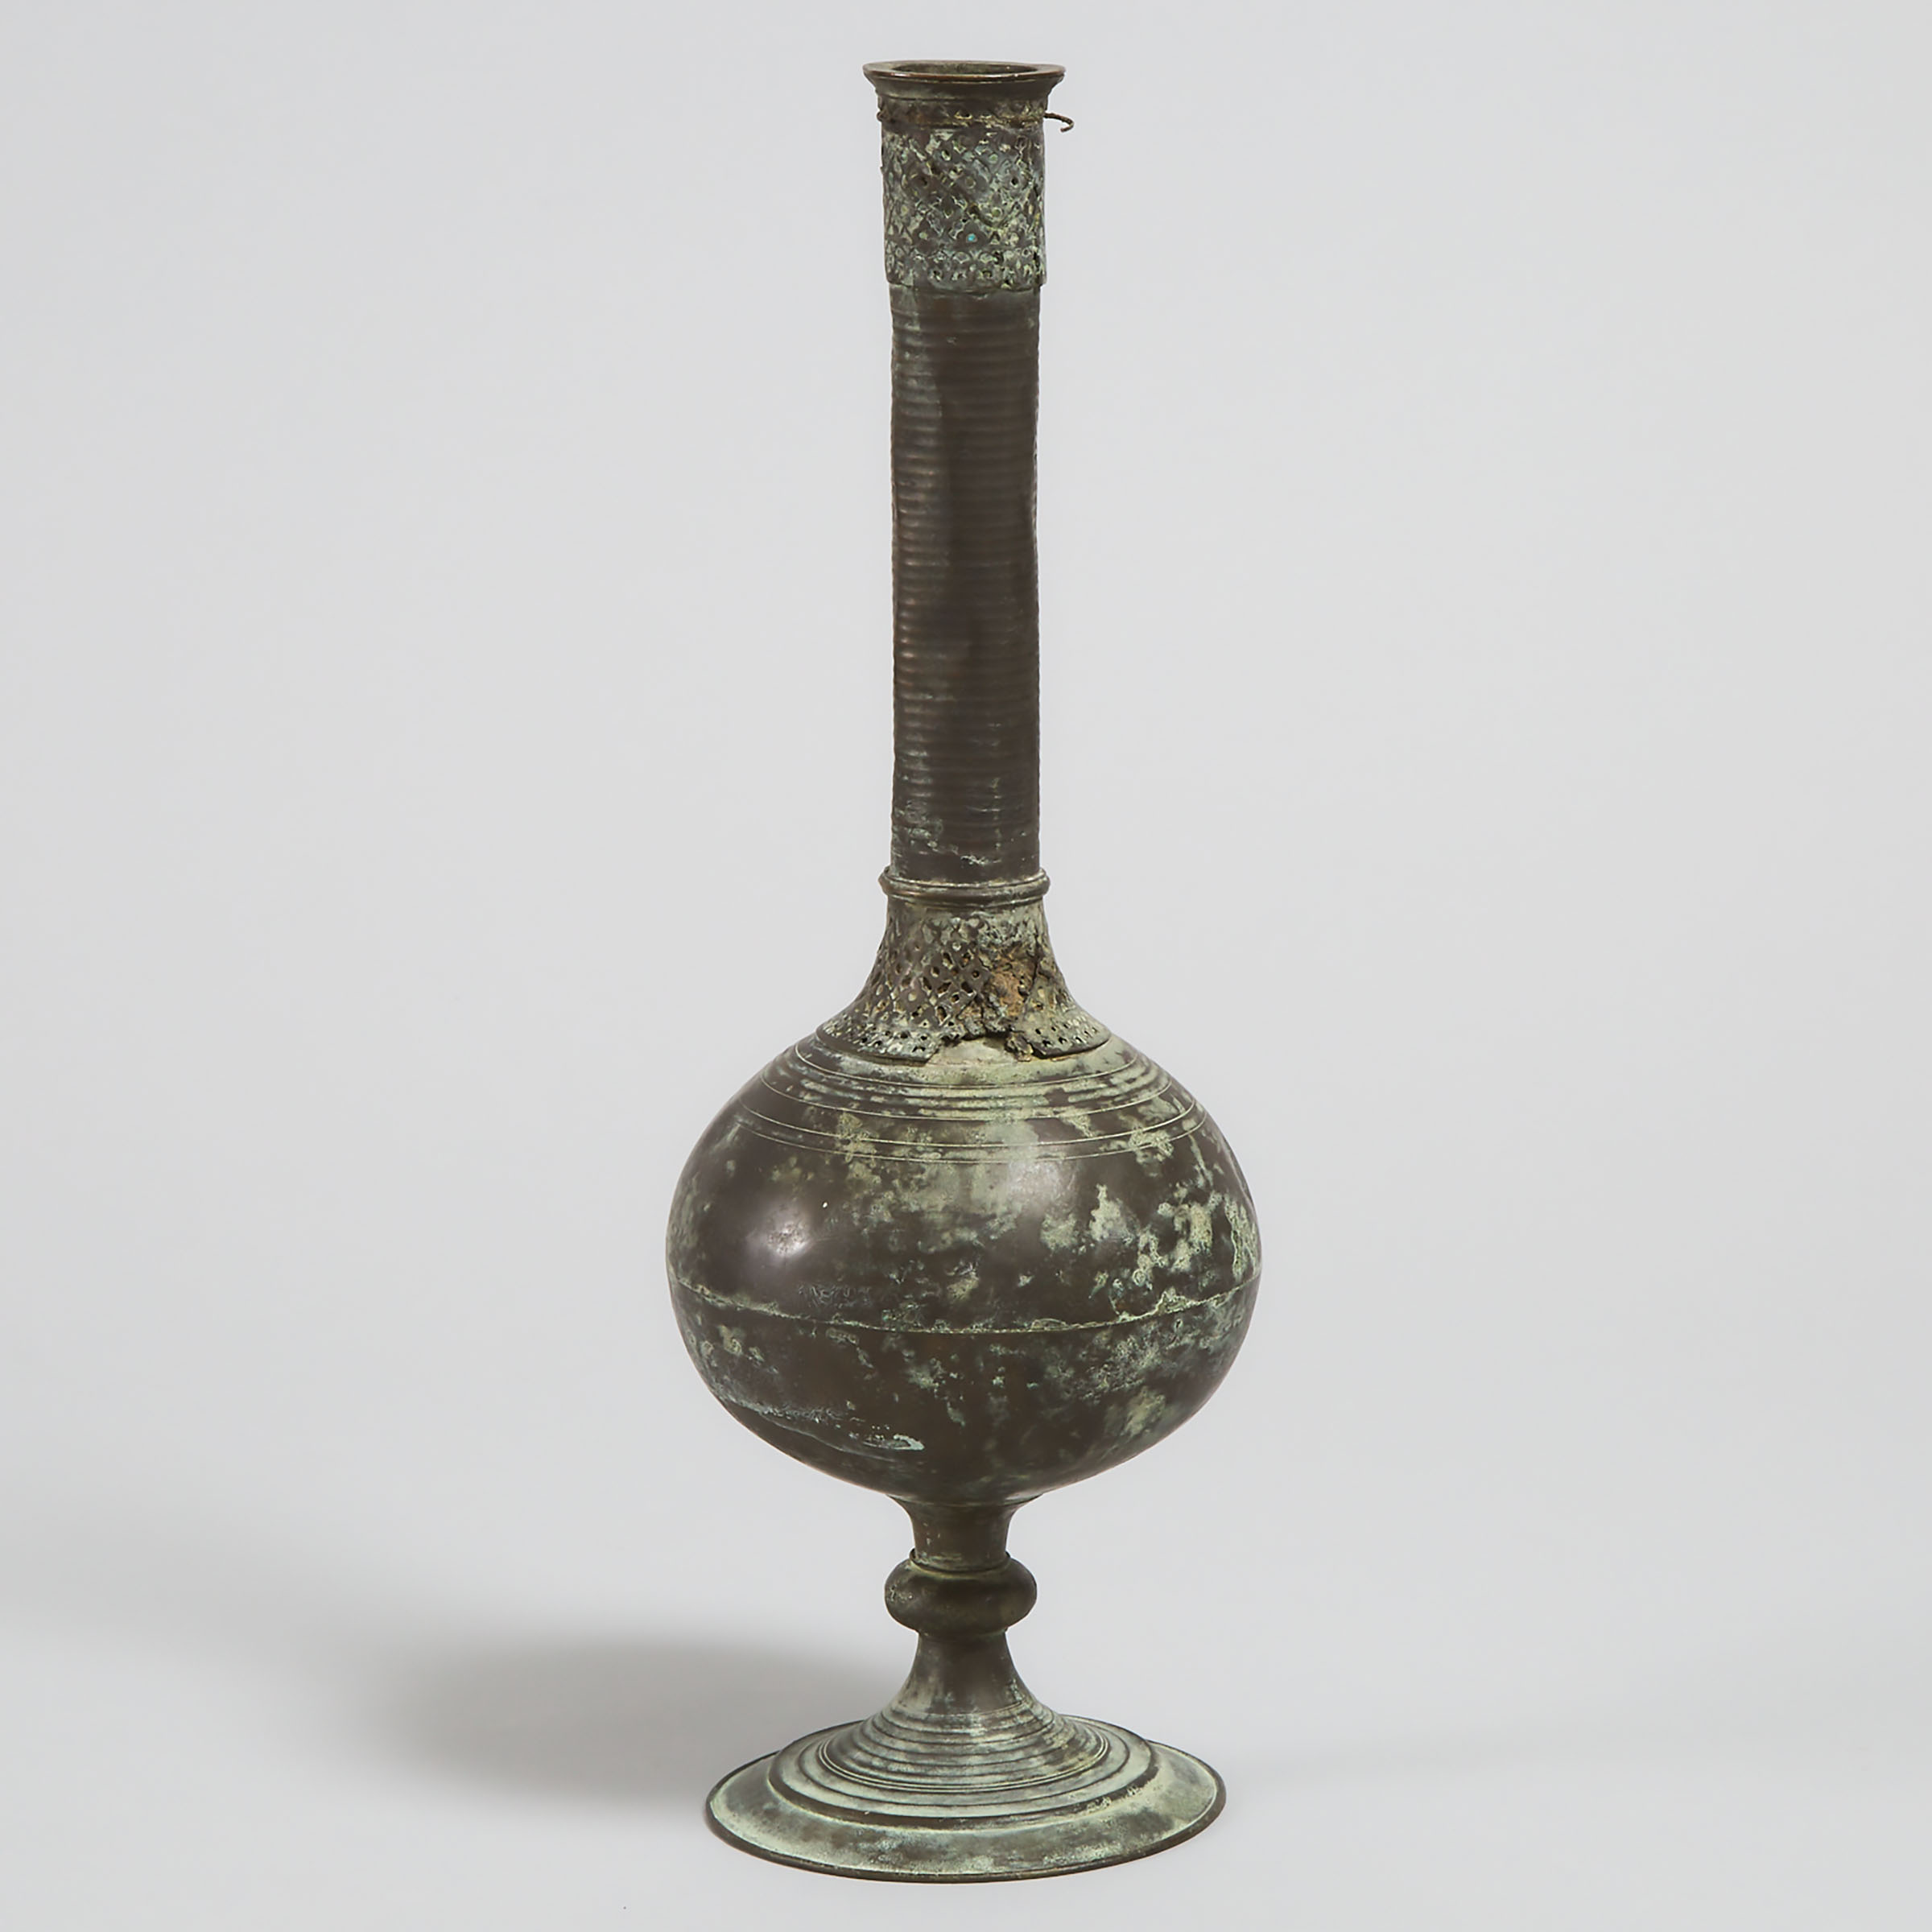 Islamic Brass Bottle Vase, c.13th century